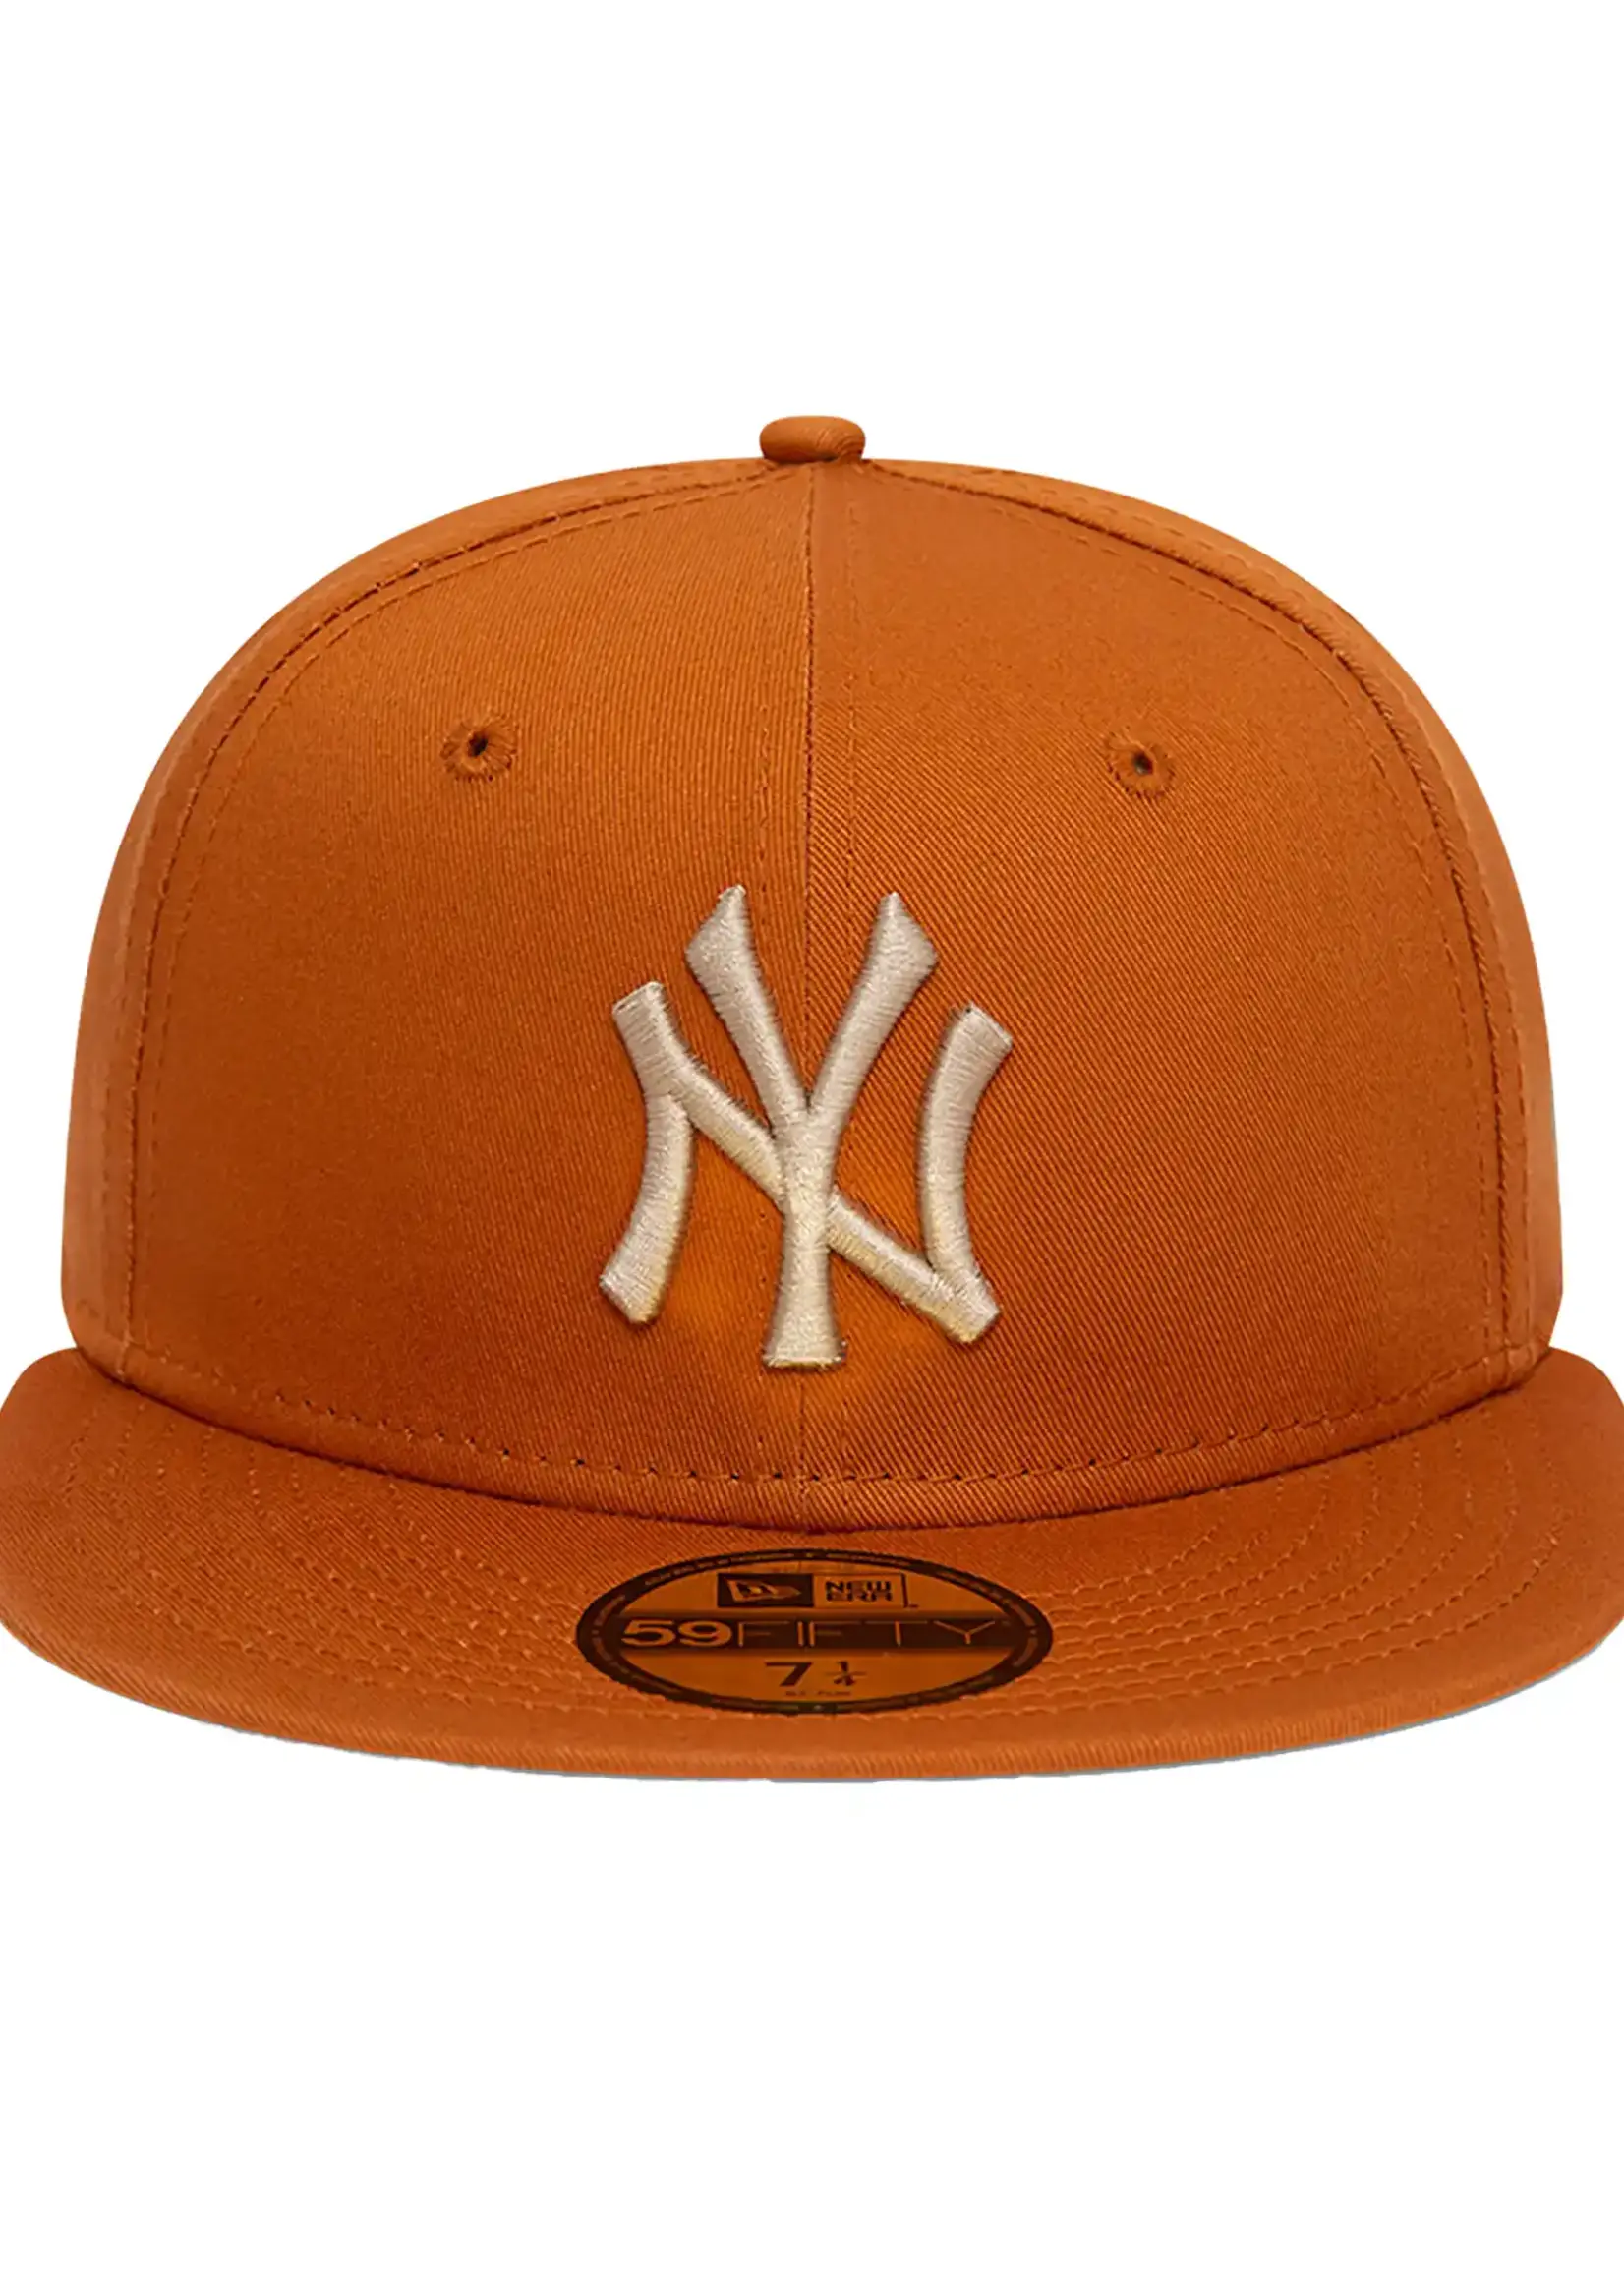 New Era New York Yankees Fitted Cap Camel Beige